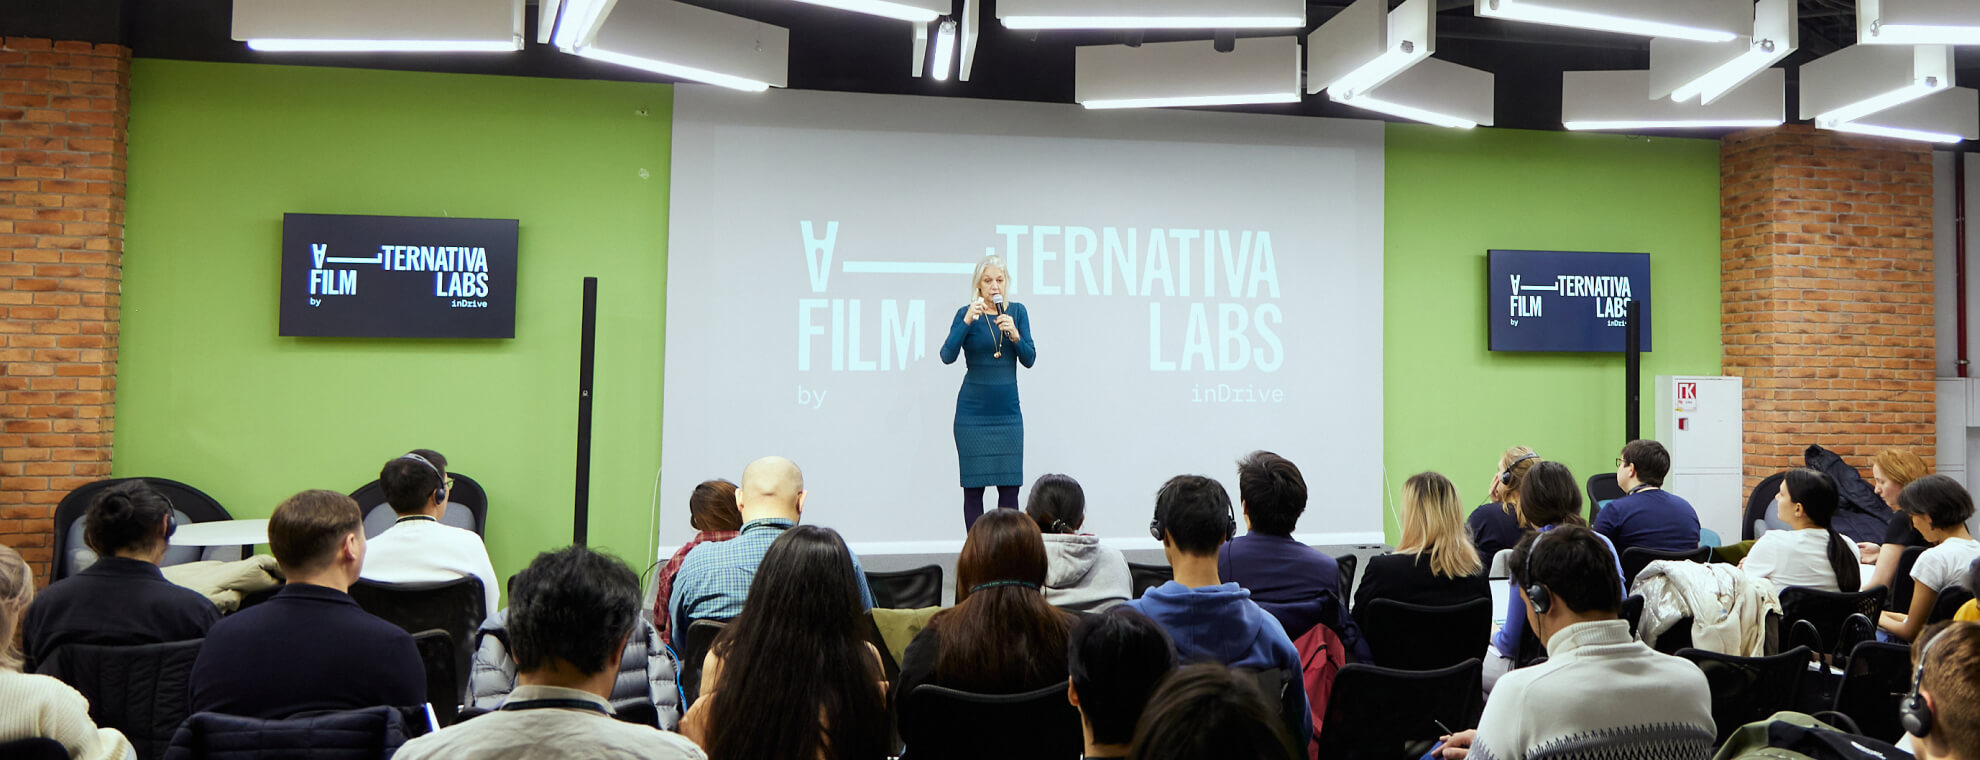 Alternativa Film Labs объявляет набор в кинолабораторию Impact Lab